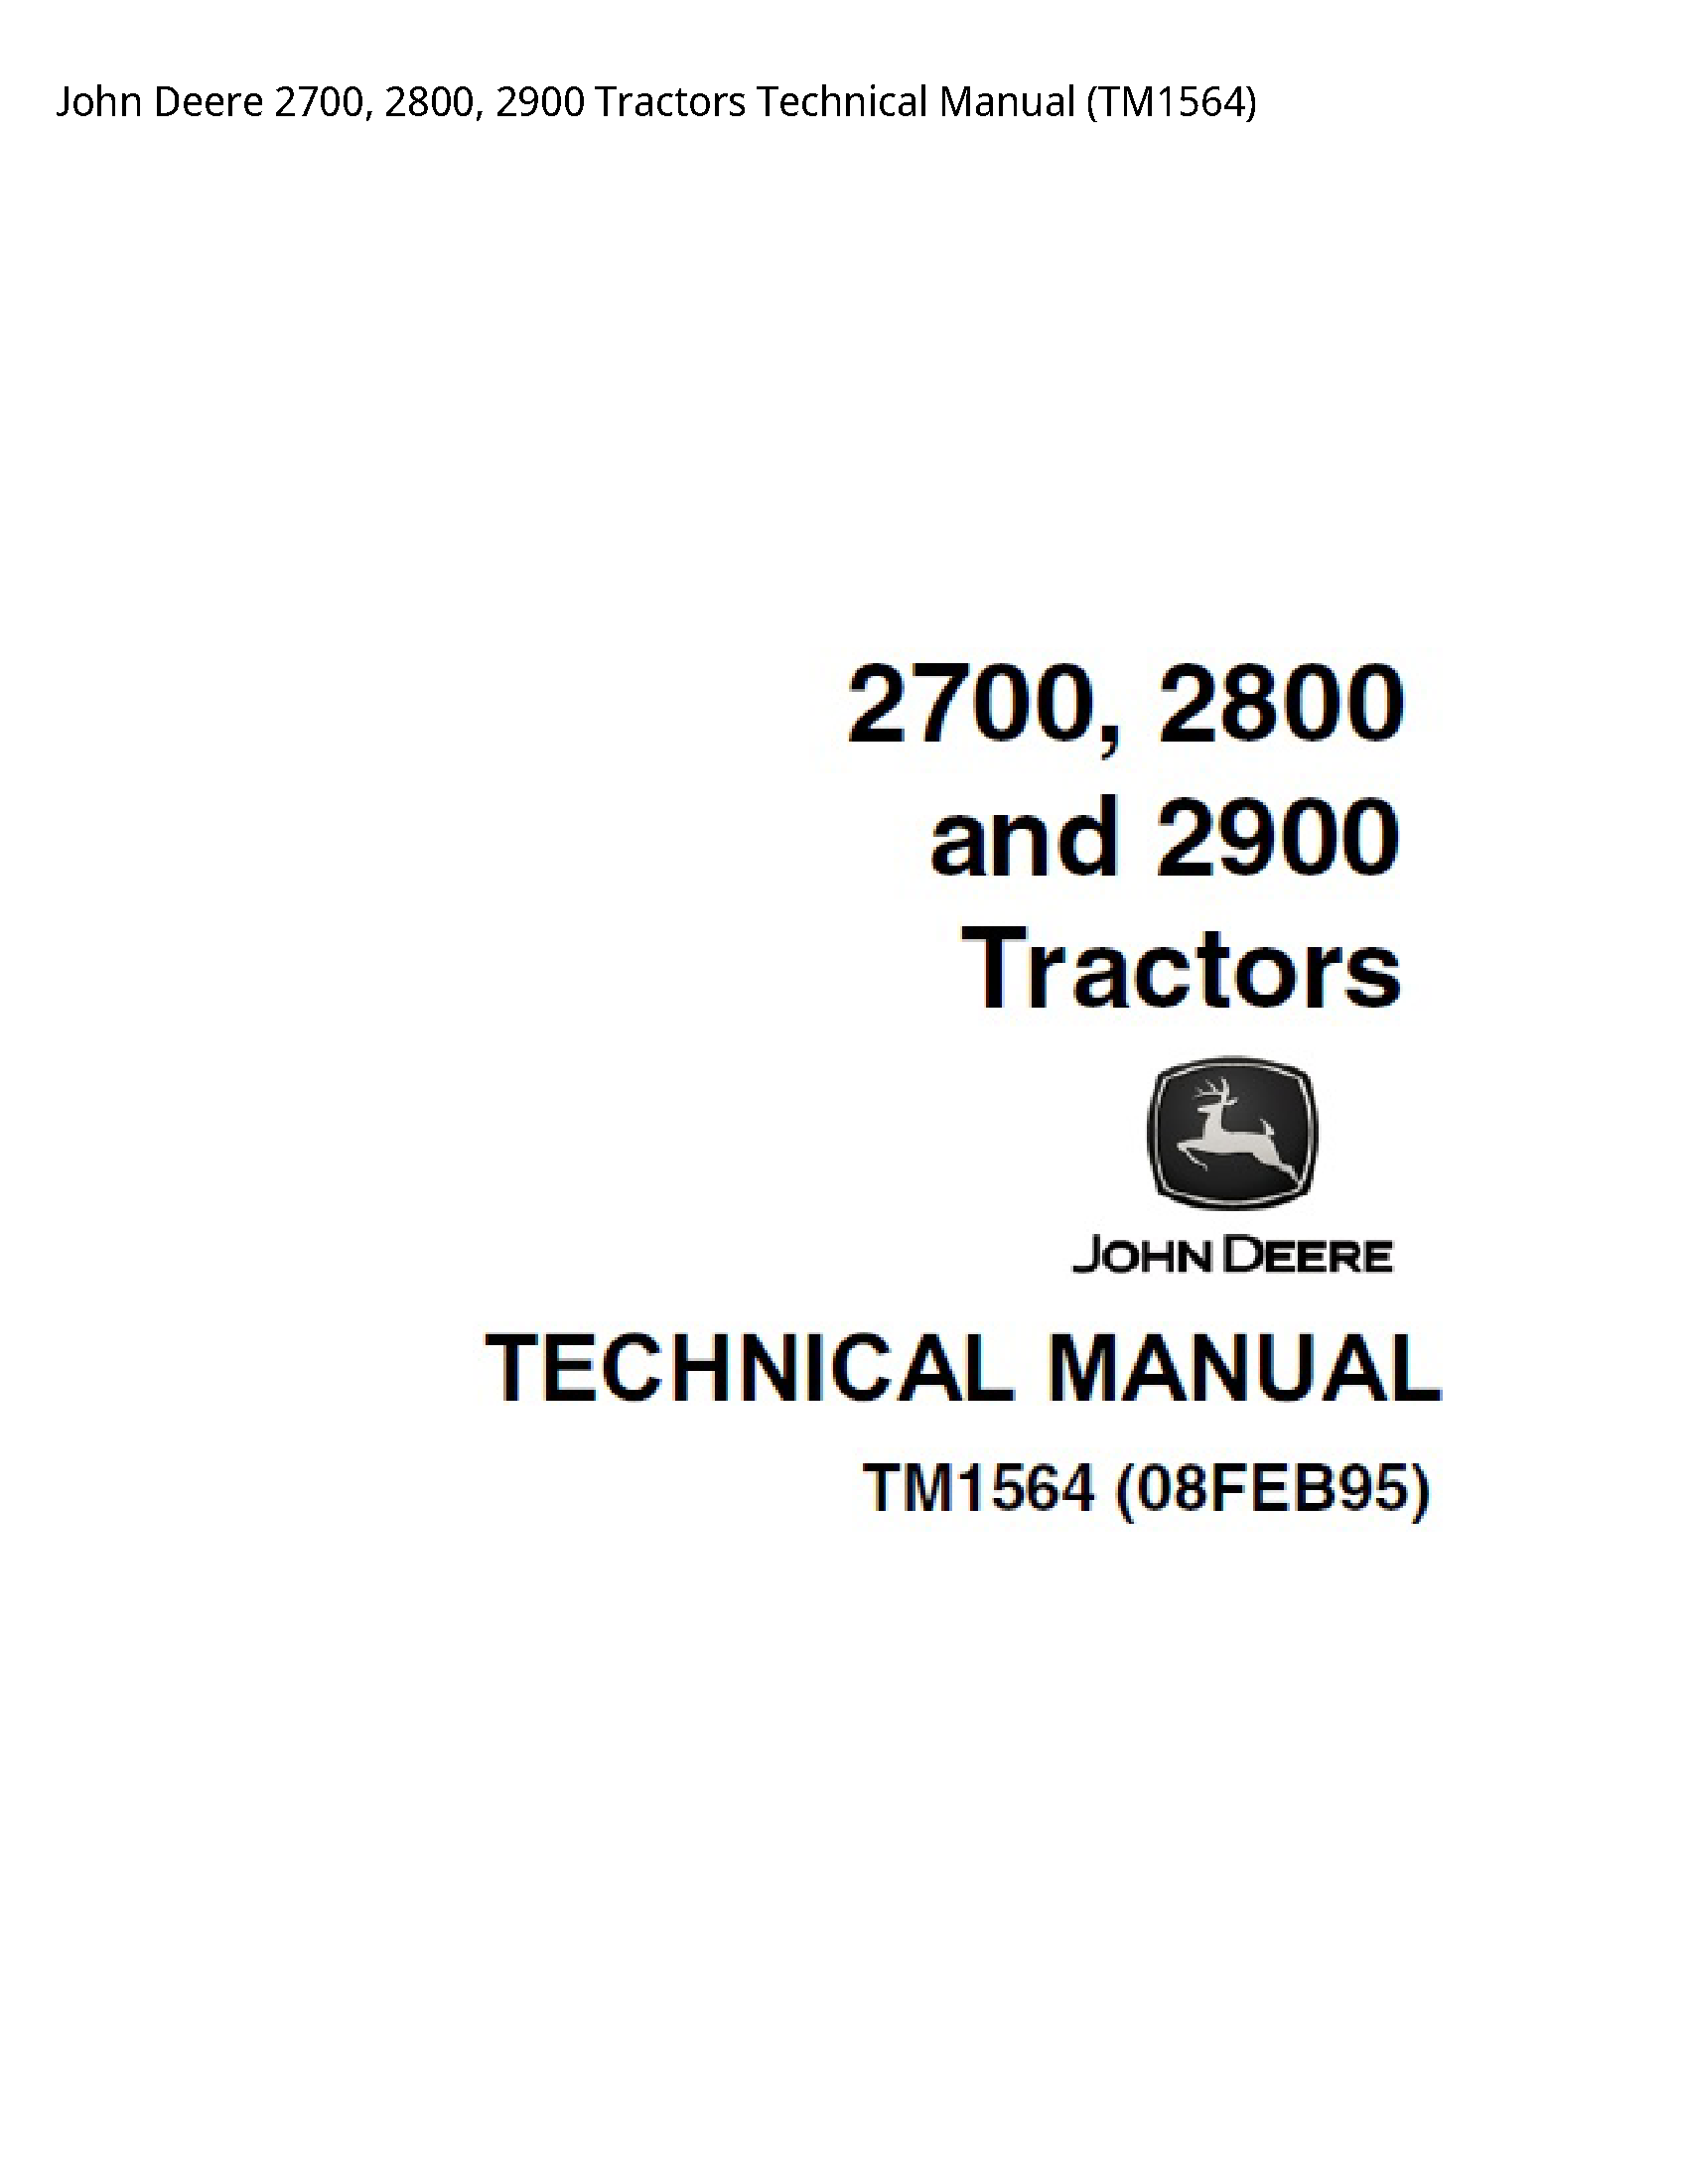 John Deere 2700 Tractors Technical manual